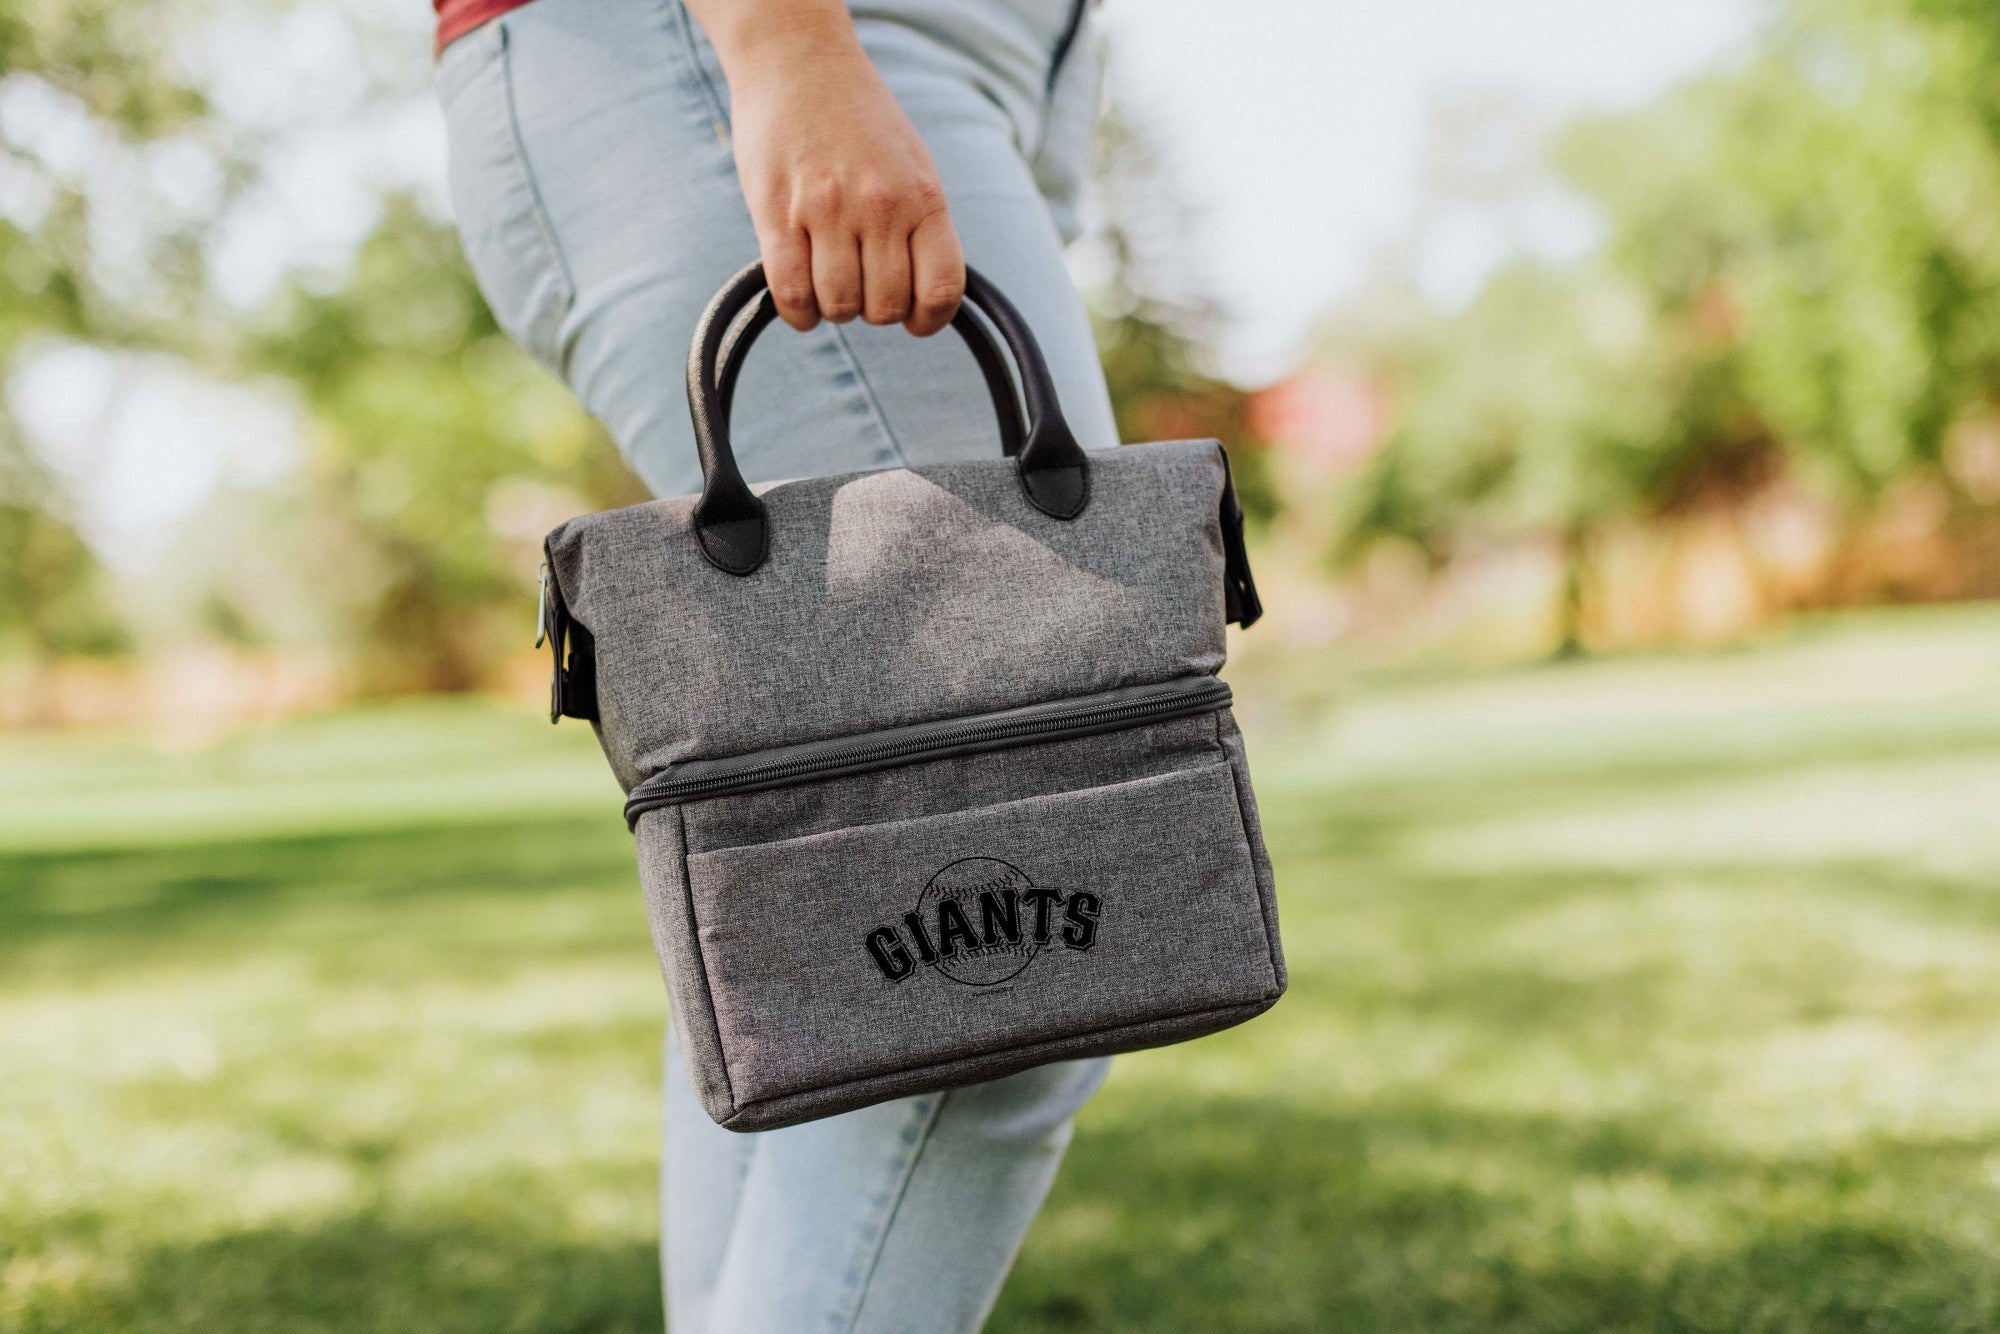 San Francisco Giants - Urban Lunch Bag Cooler